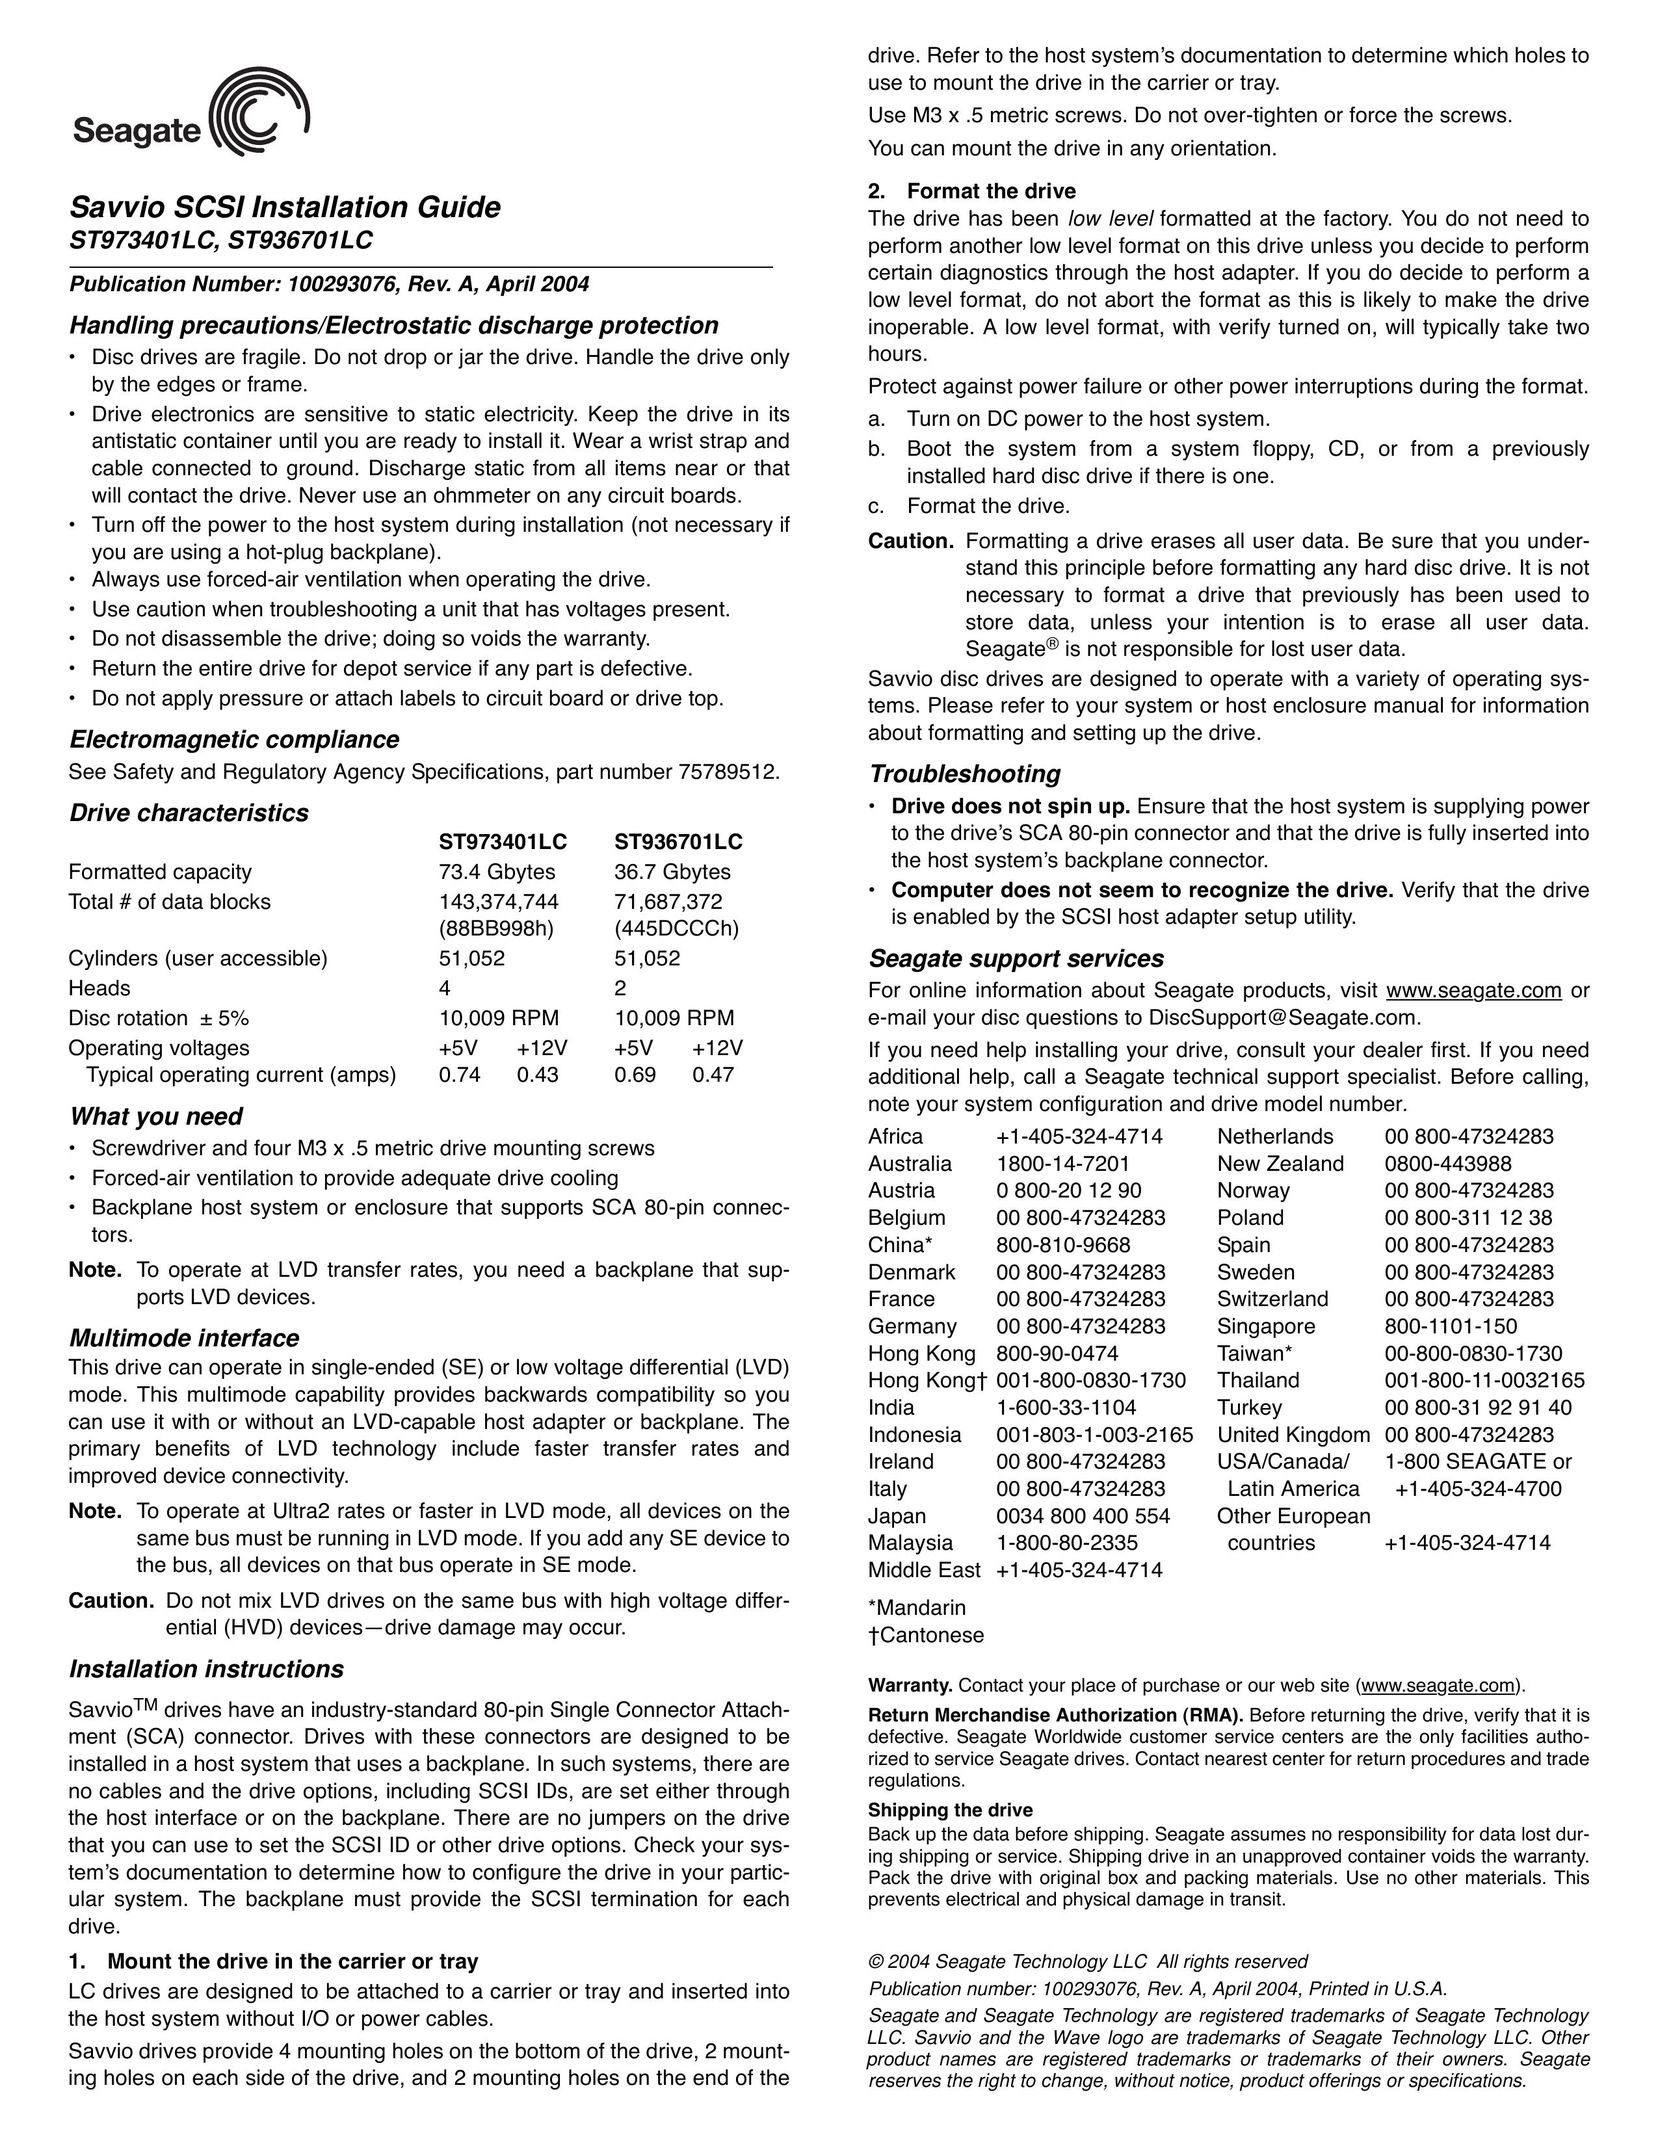 Seagate ST936701LC Computer Hardware User Manual